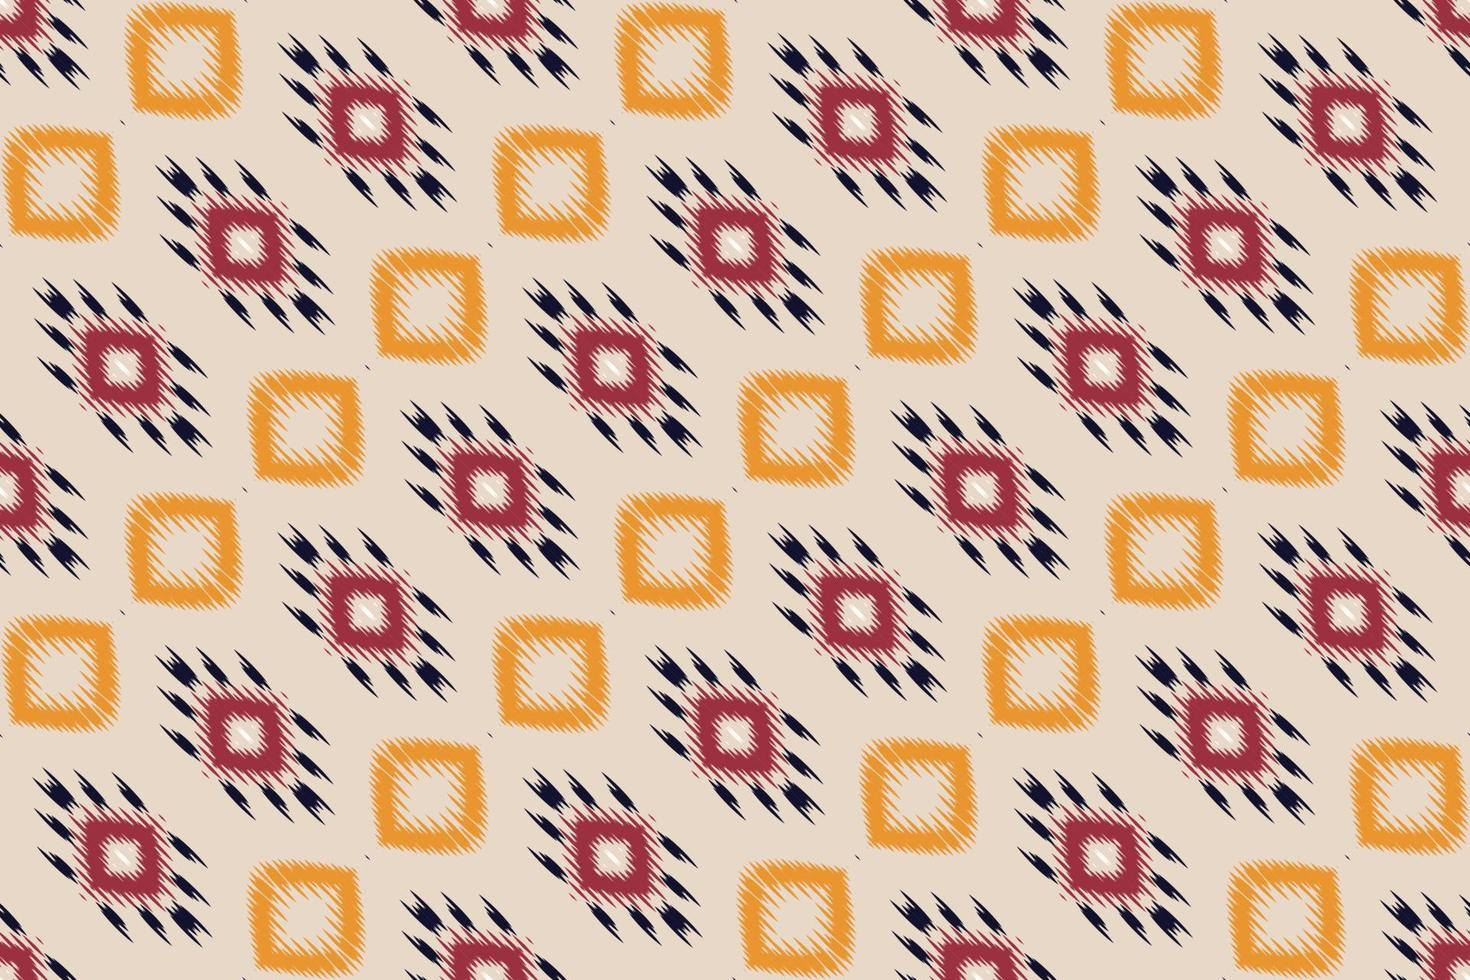 batik textil ikat imprime patrón sin costuras diseño de vector digital para imprimir saree kurti borneo borde de tela símbolos de pincel muestras ropa de fiesta